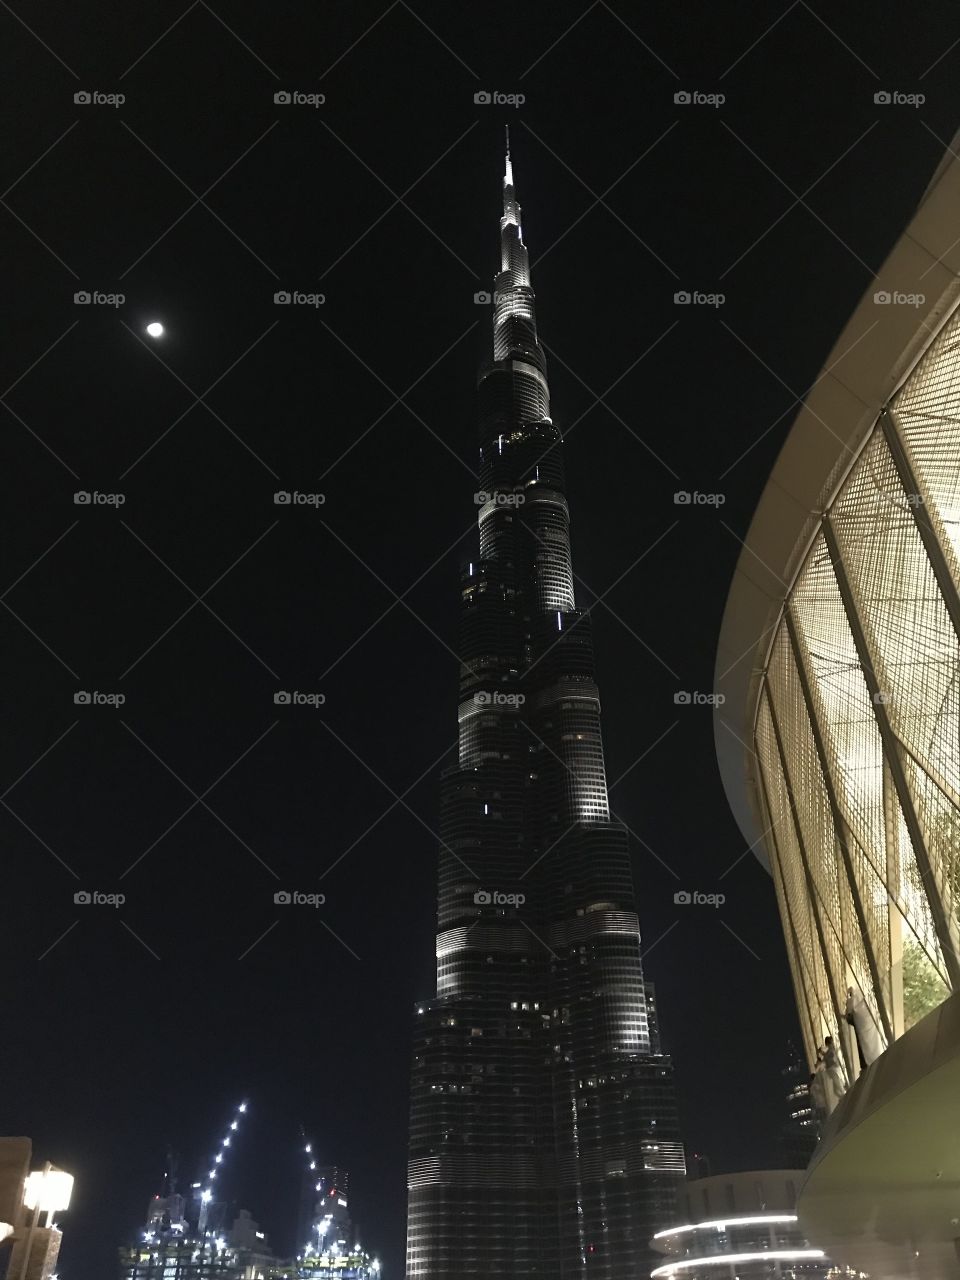 The Burj Khalifa at night is stunning. Definitely recommend a trip to Dubai.